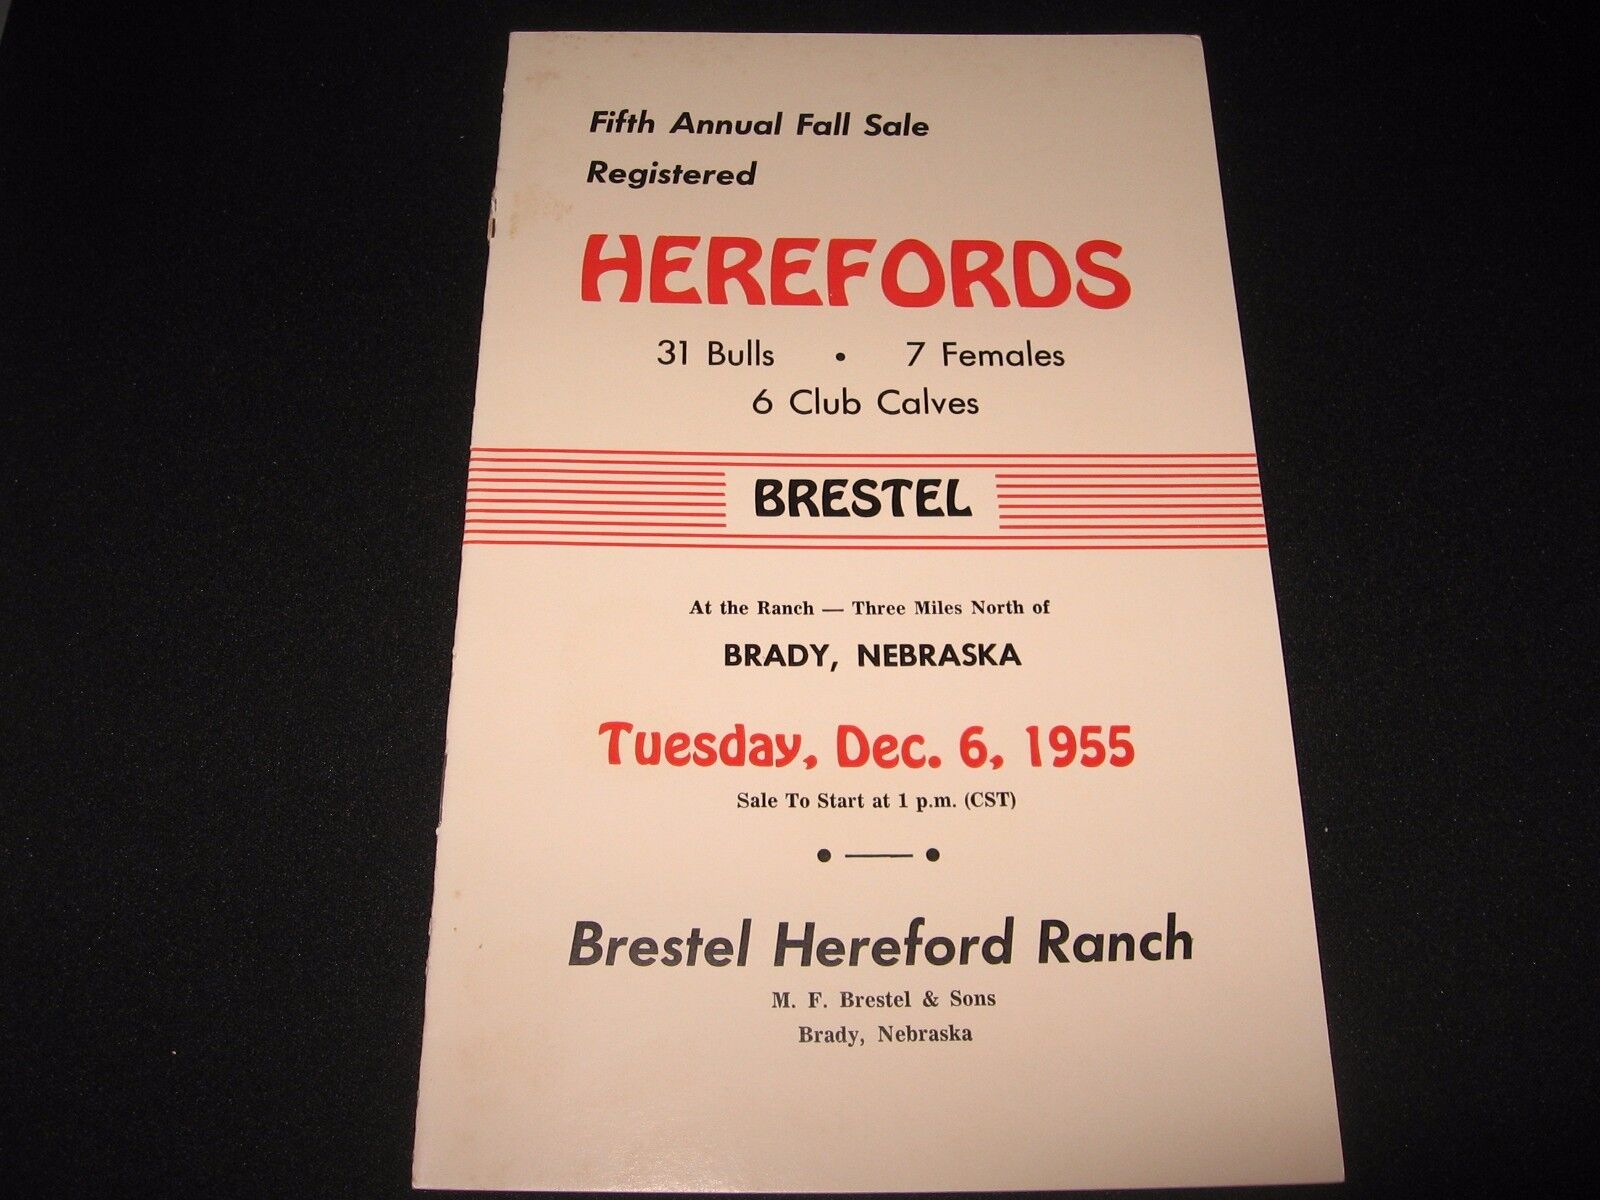 5TH ANNUAL FALL HEREFORDS SALE (BRADY, NEB) DEC 6, 1955 (BRESTEL HEREFORD RANCH)